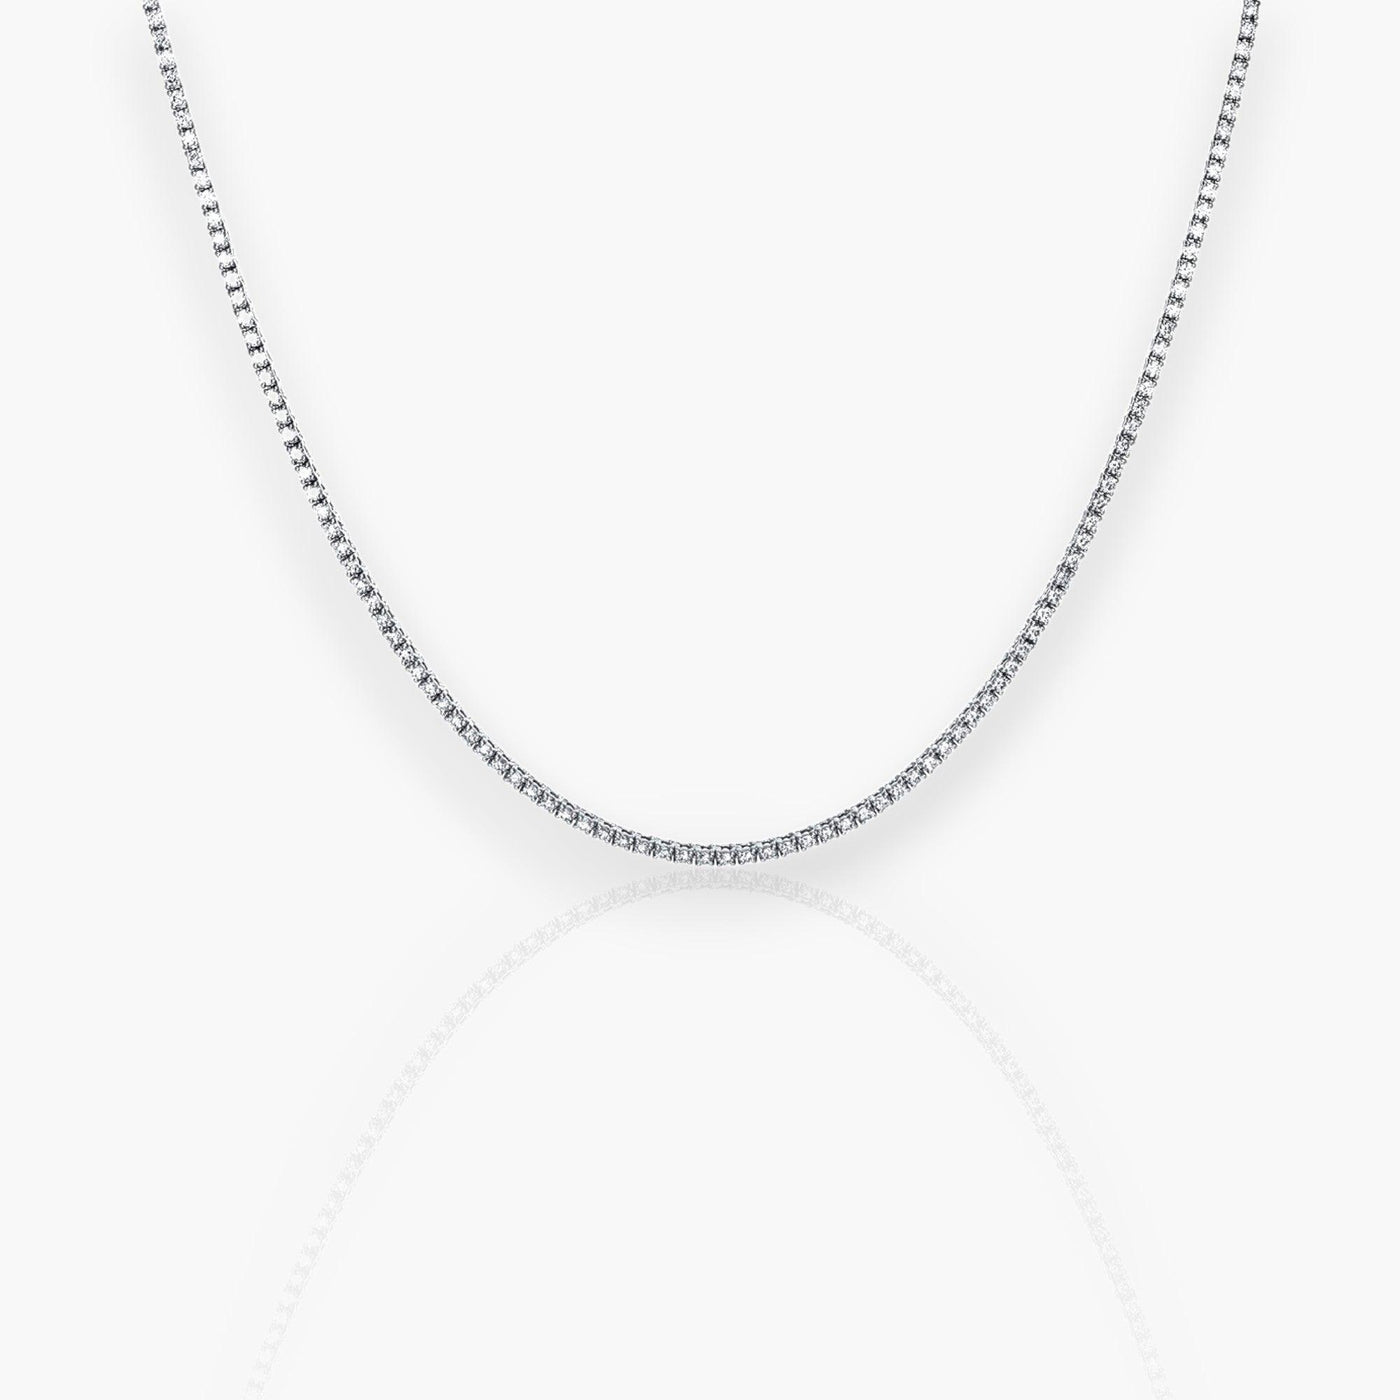 Tennis Necklace, 3.37ct (White Gold) - Moregola Fine Jewelry